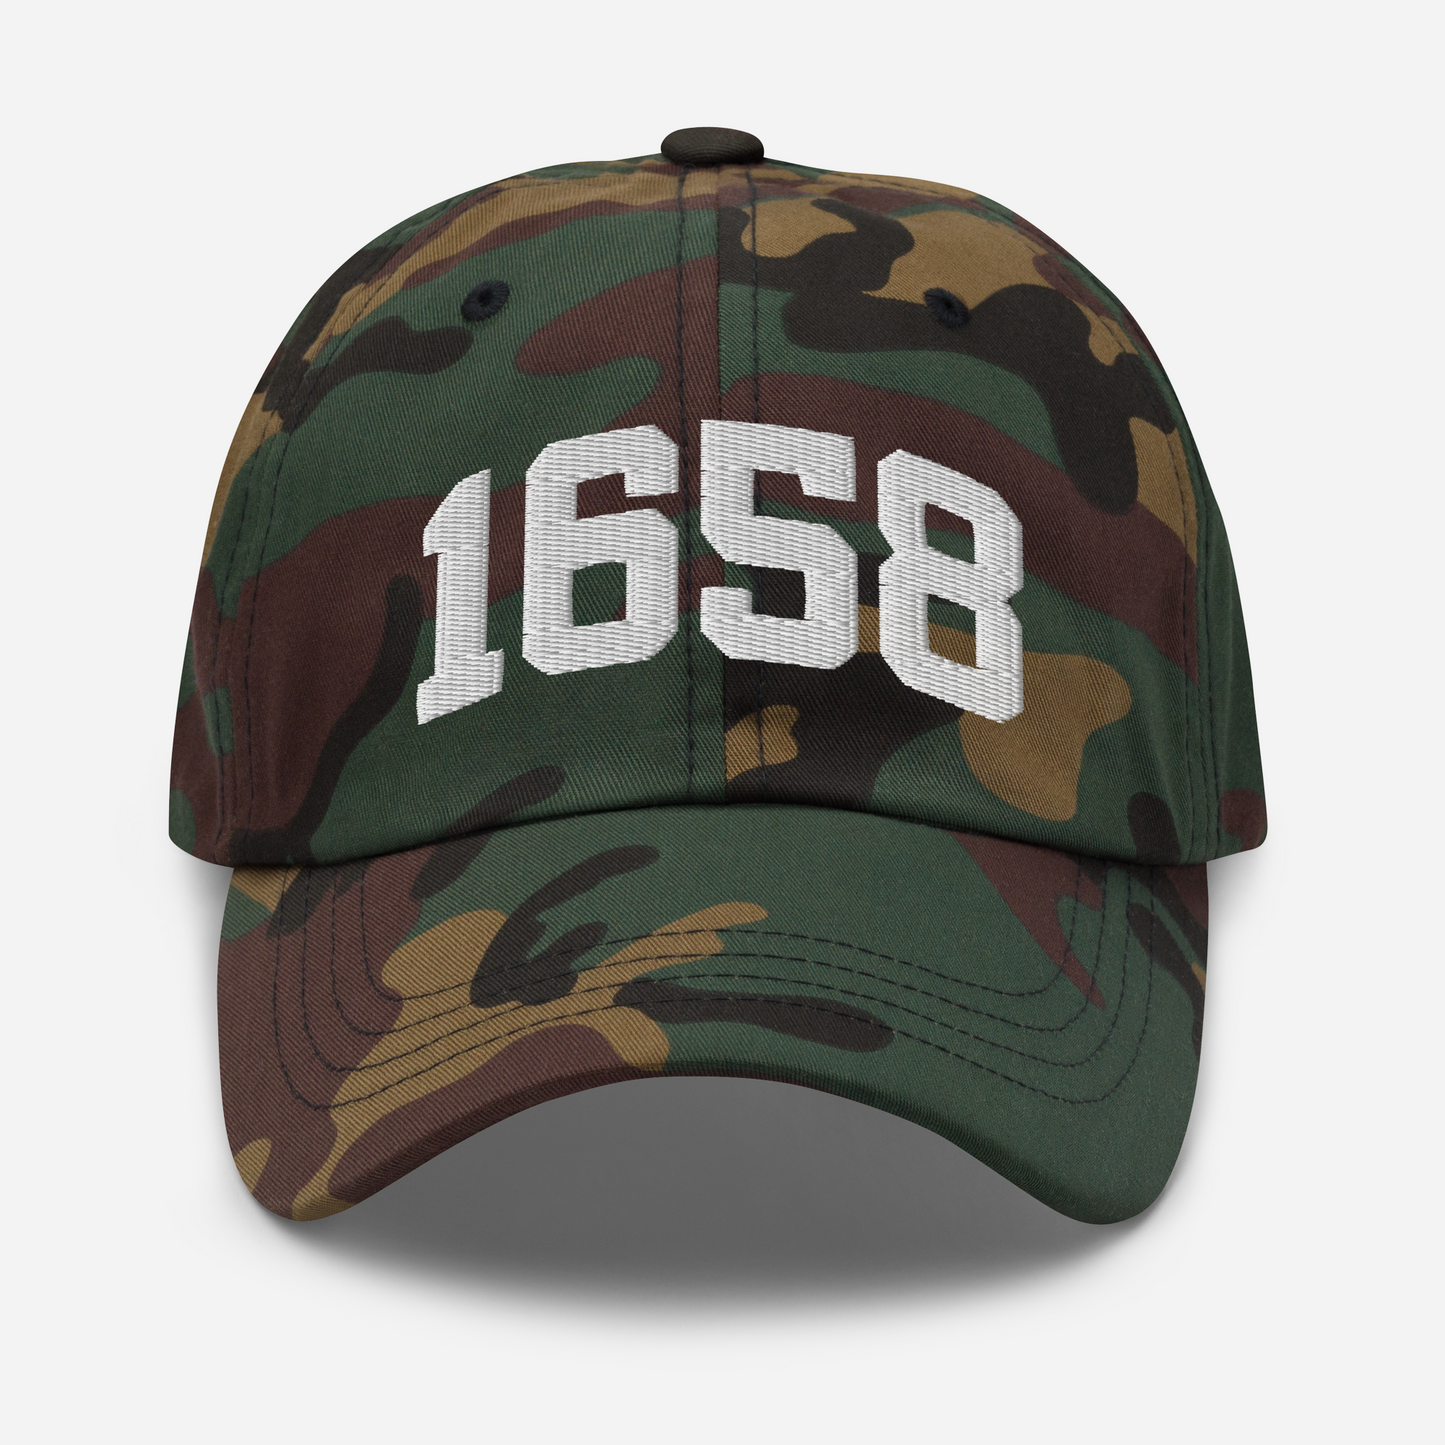 1658 Baseball Hat